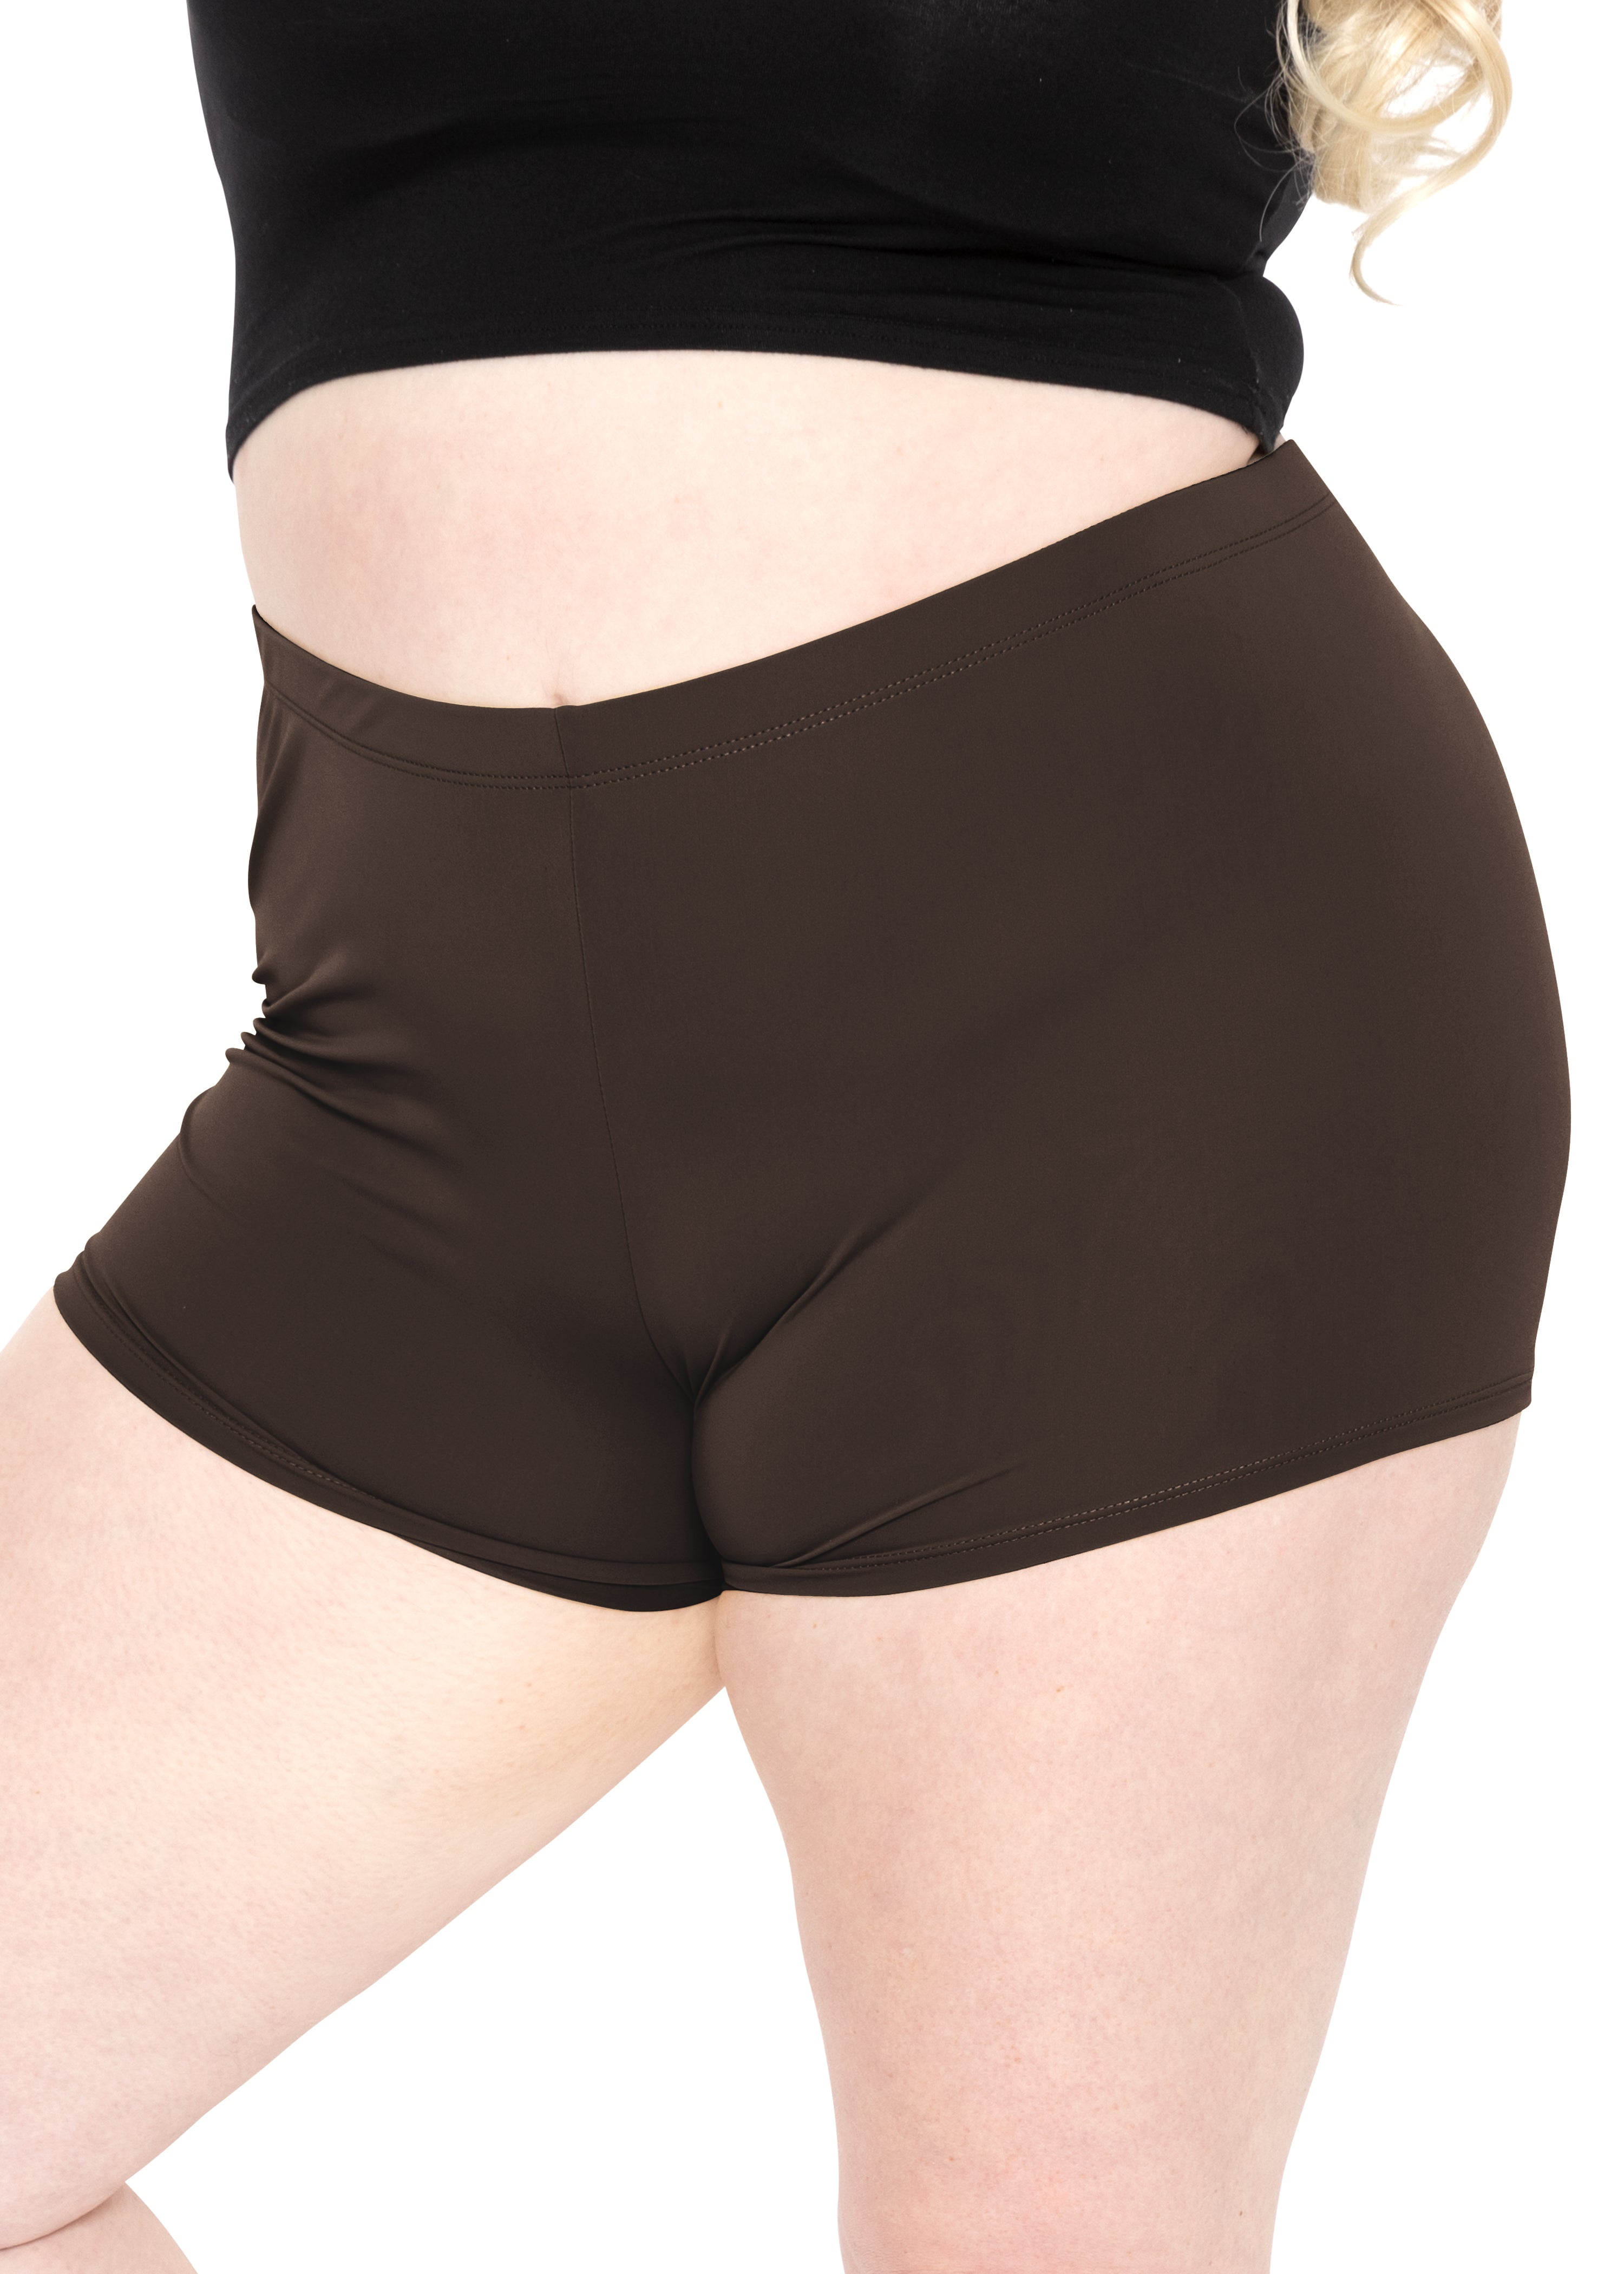 david scassola add photo big booty in spandex shorts